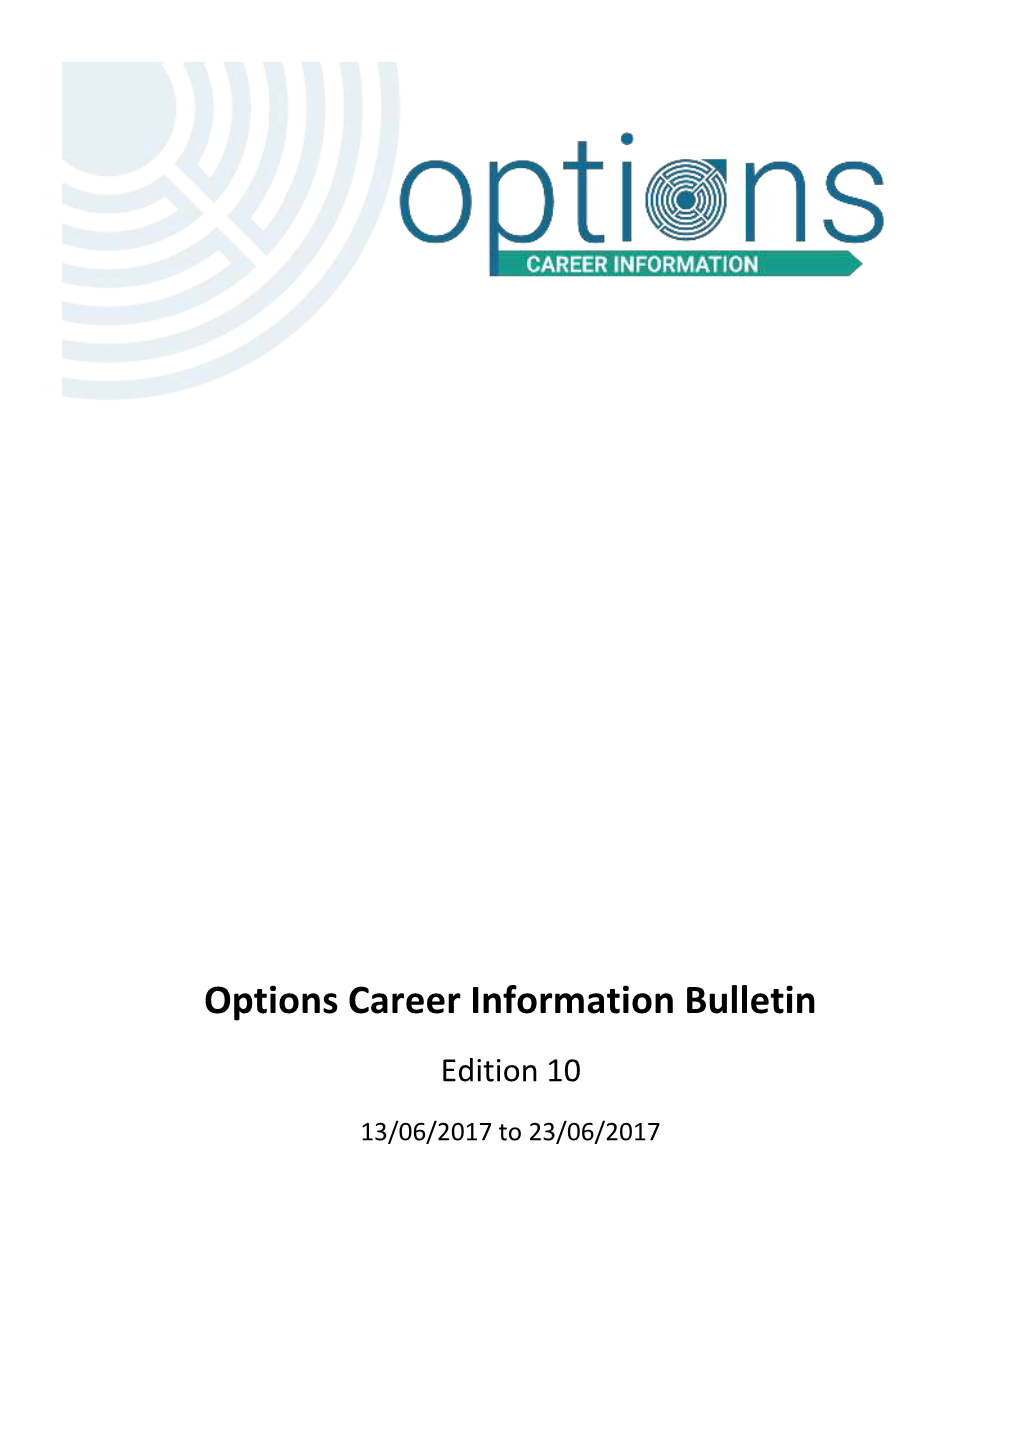 Options Career Information Bulletin Edition 10